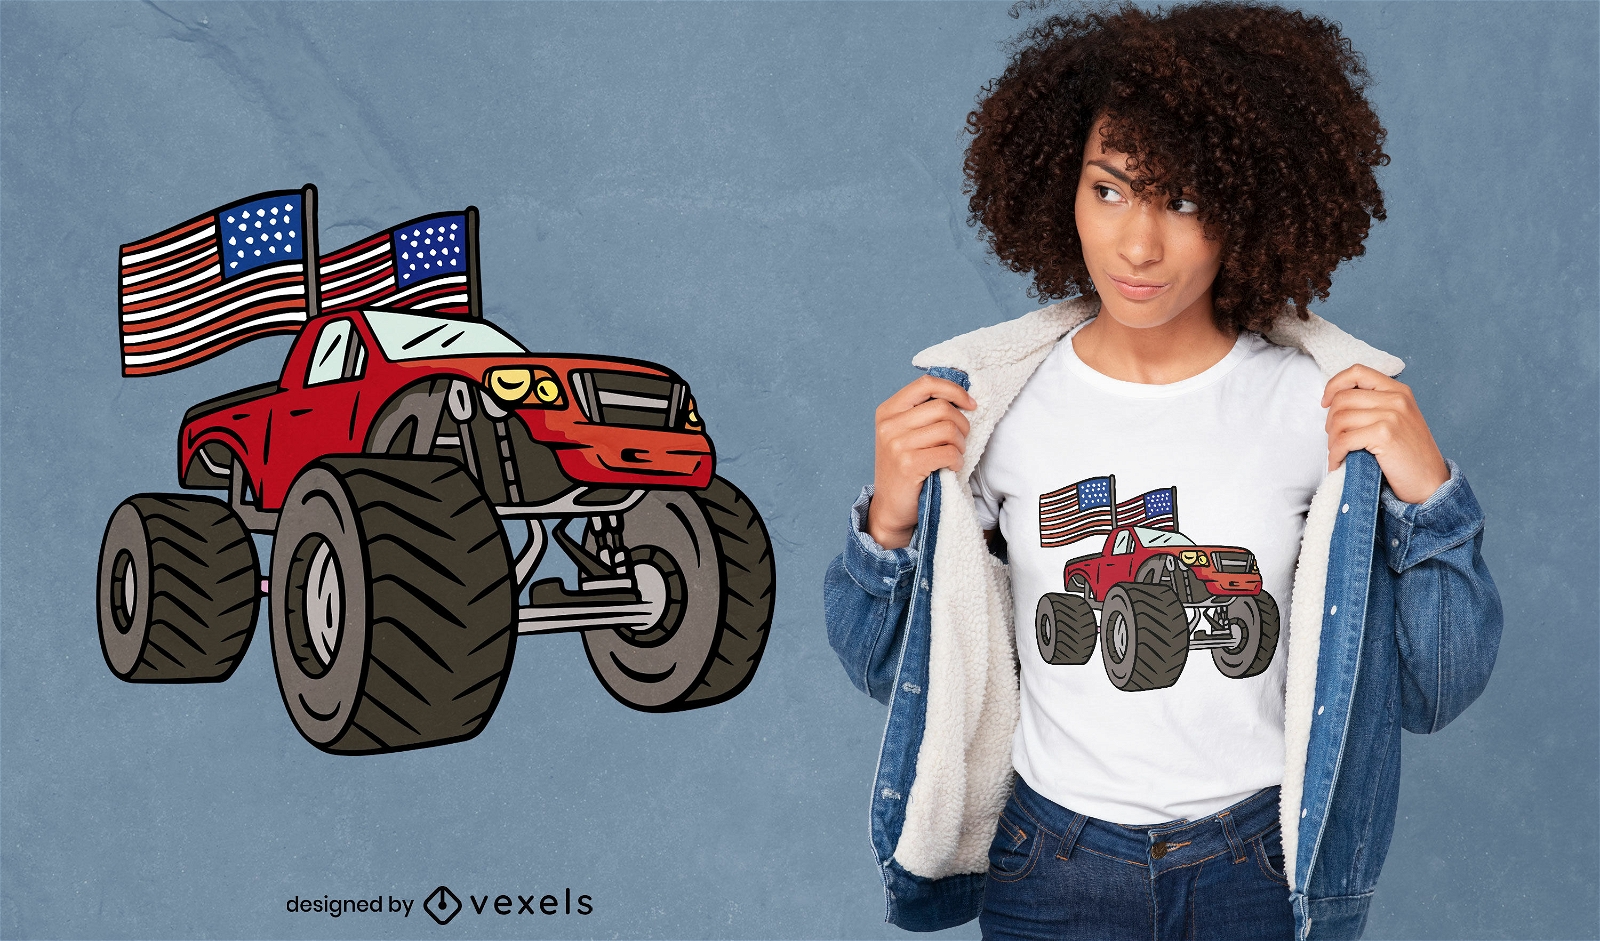 Great American truck t-shirt design